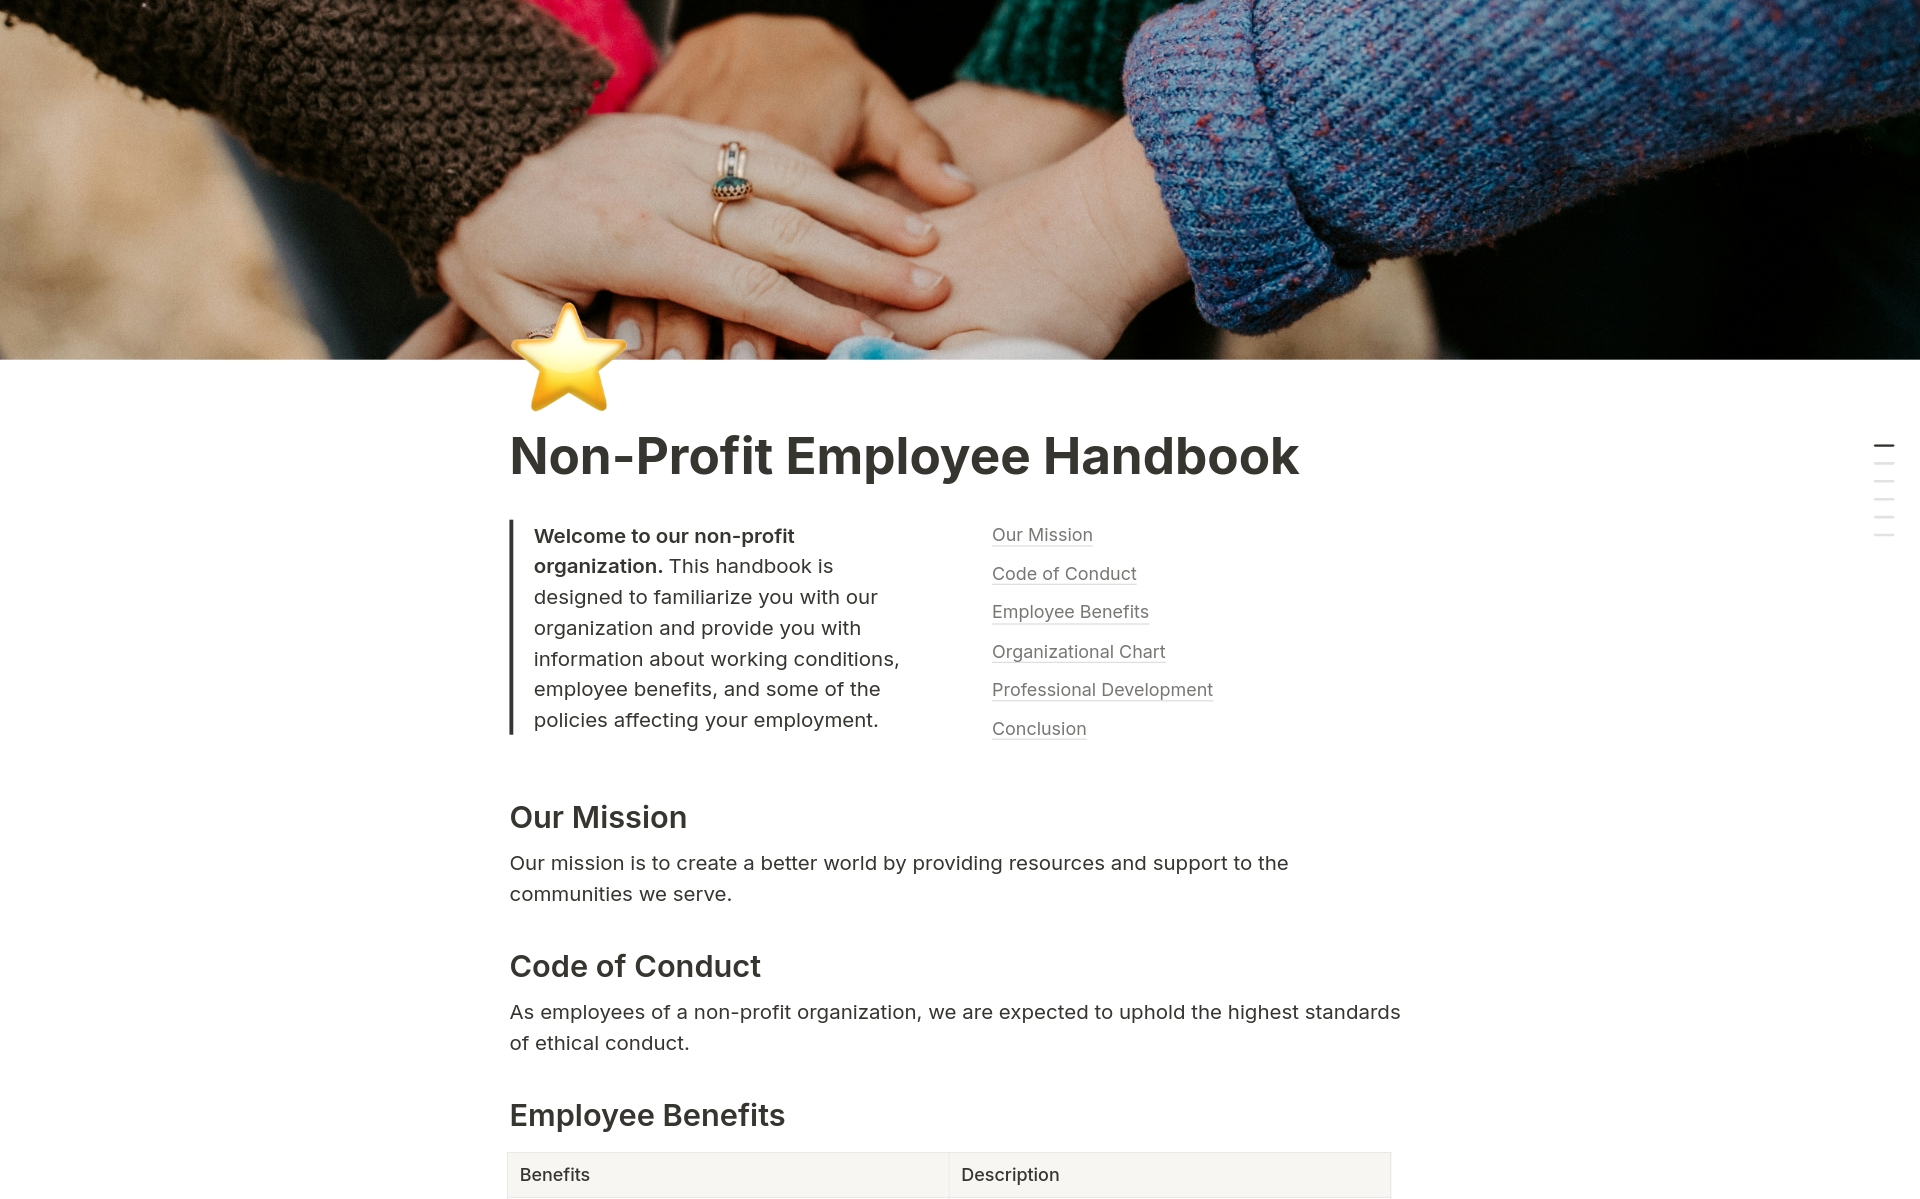 Aperçu du modèle de Non-Profit Employee Handbook